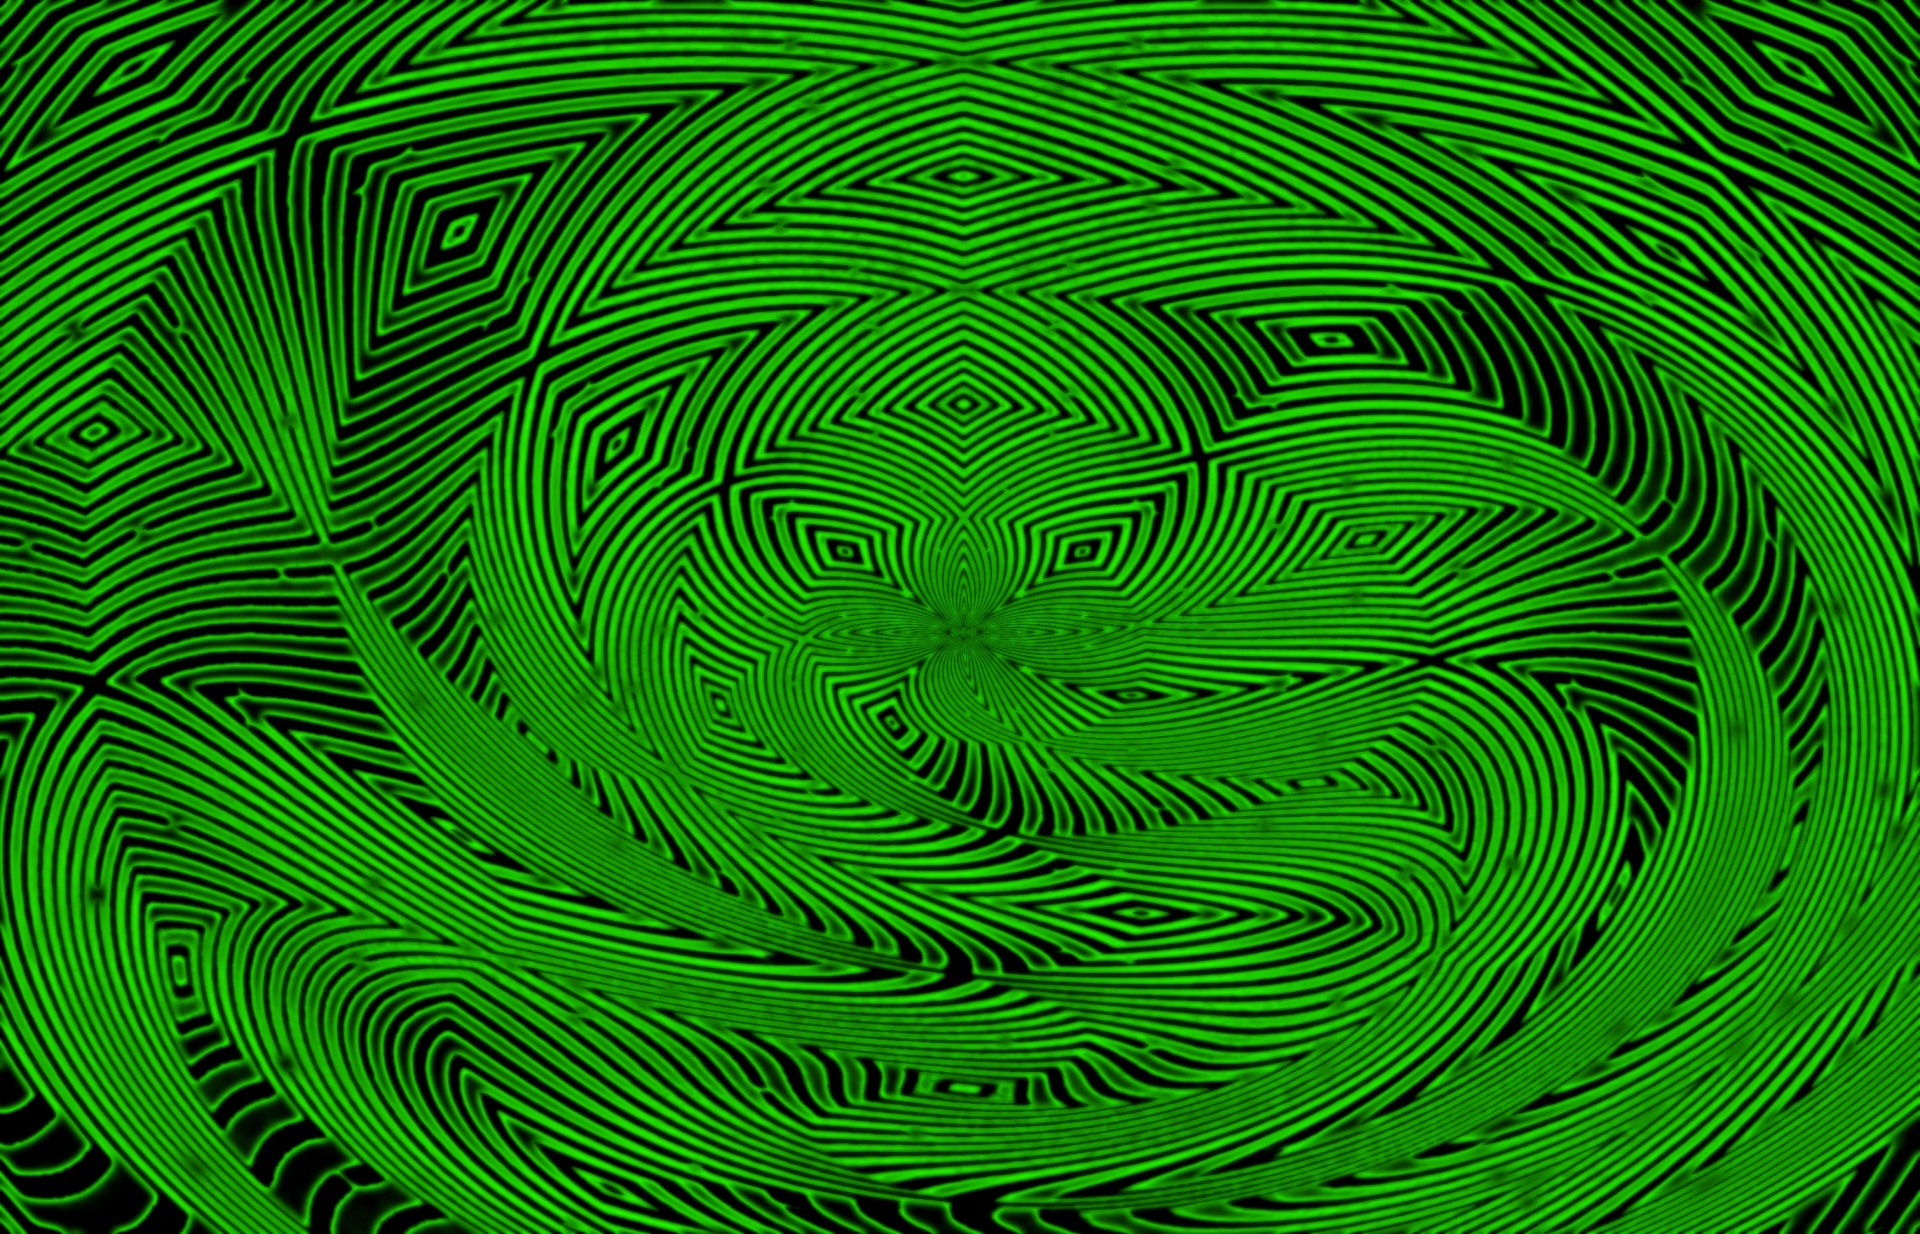 green and black twirled geometric diamond diagram repeat pattern